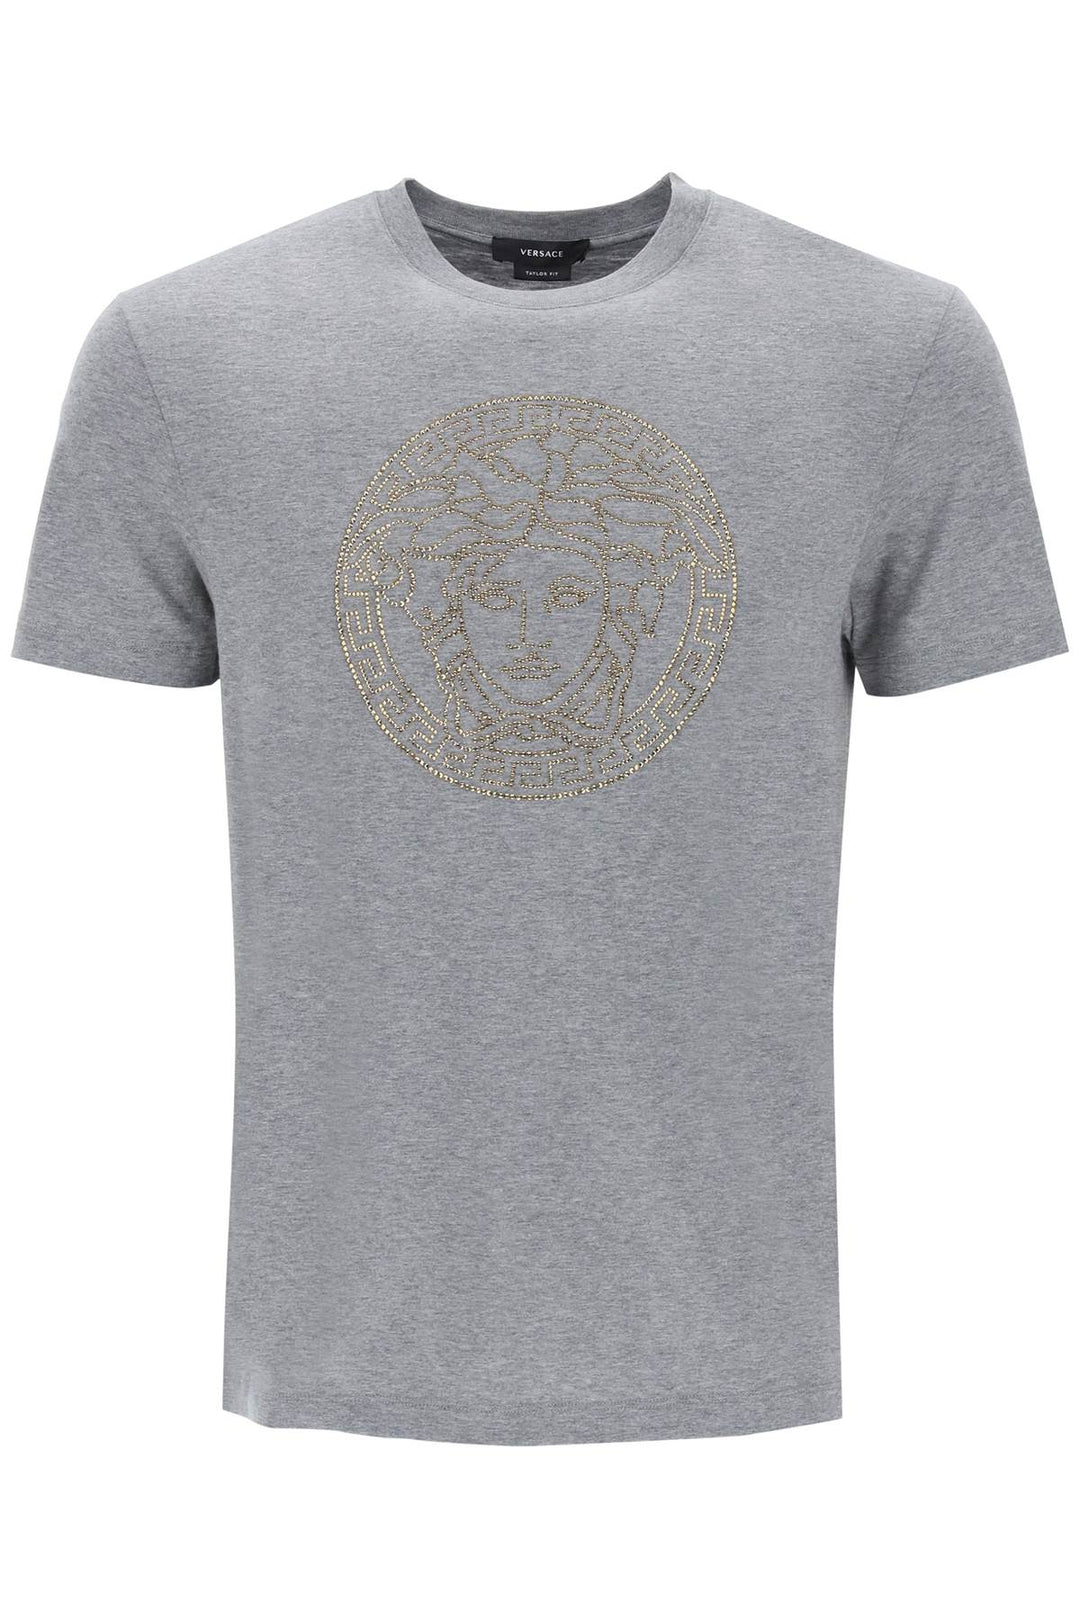 Versace Rhinestones Medusa T Shirt   Grigio